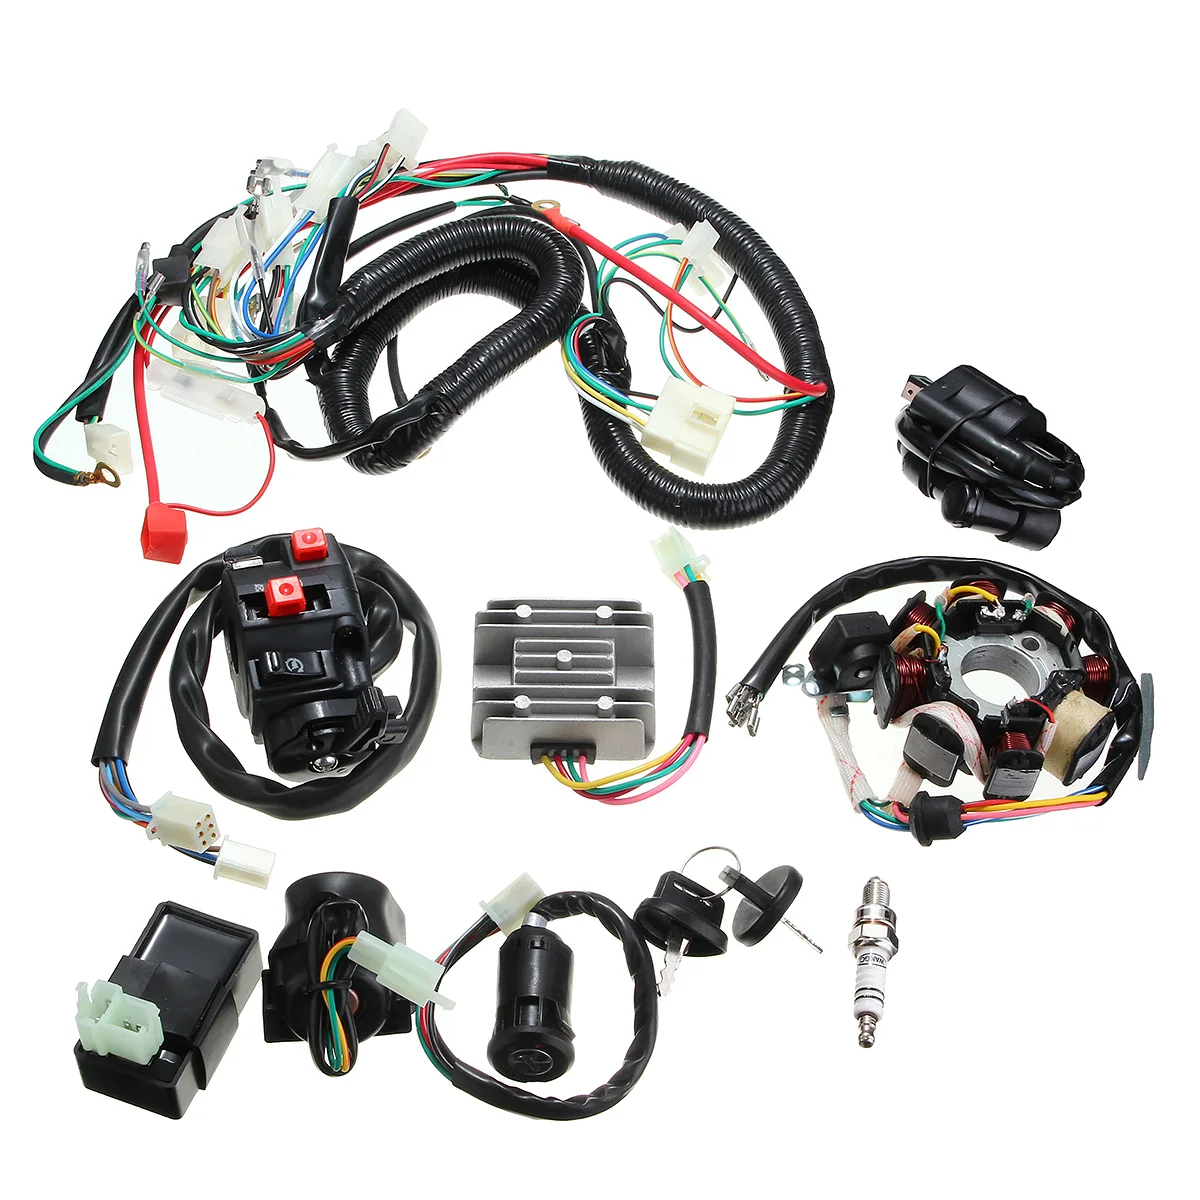 

Universal CDI Ignition Wire Harness Assembly Electric Starter Plug Control Switch 125cc 150cc 200cc 250cc Dirt Bike ATV Quad